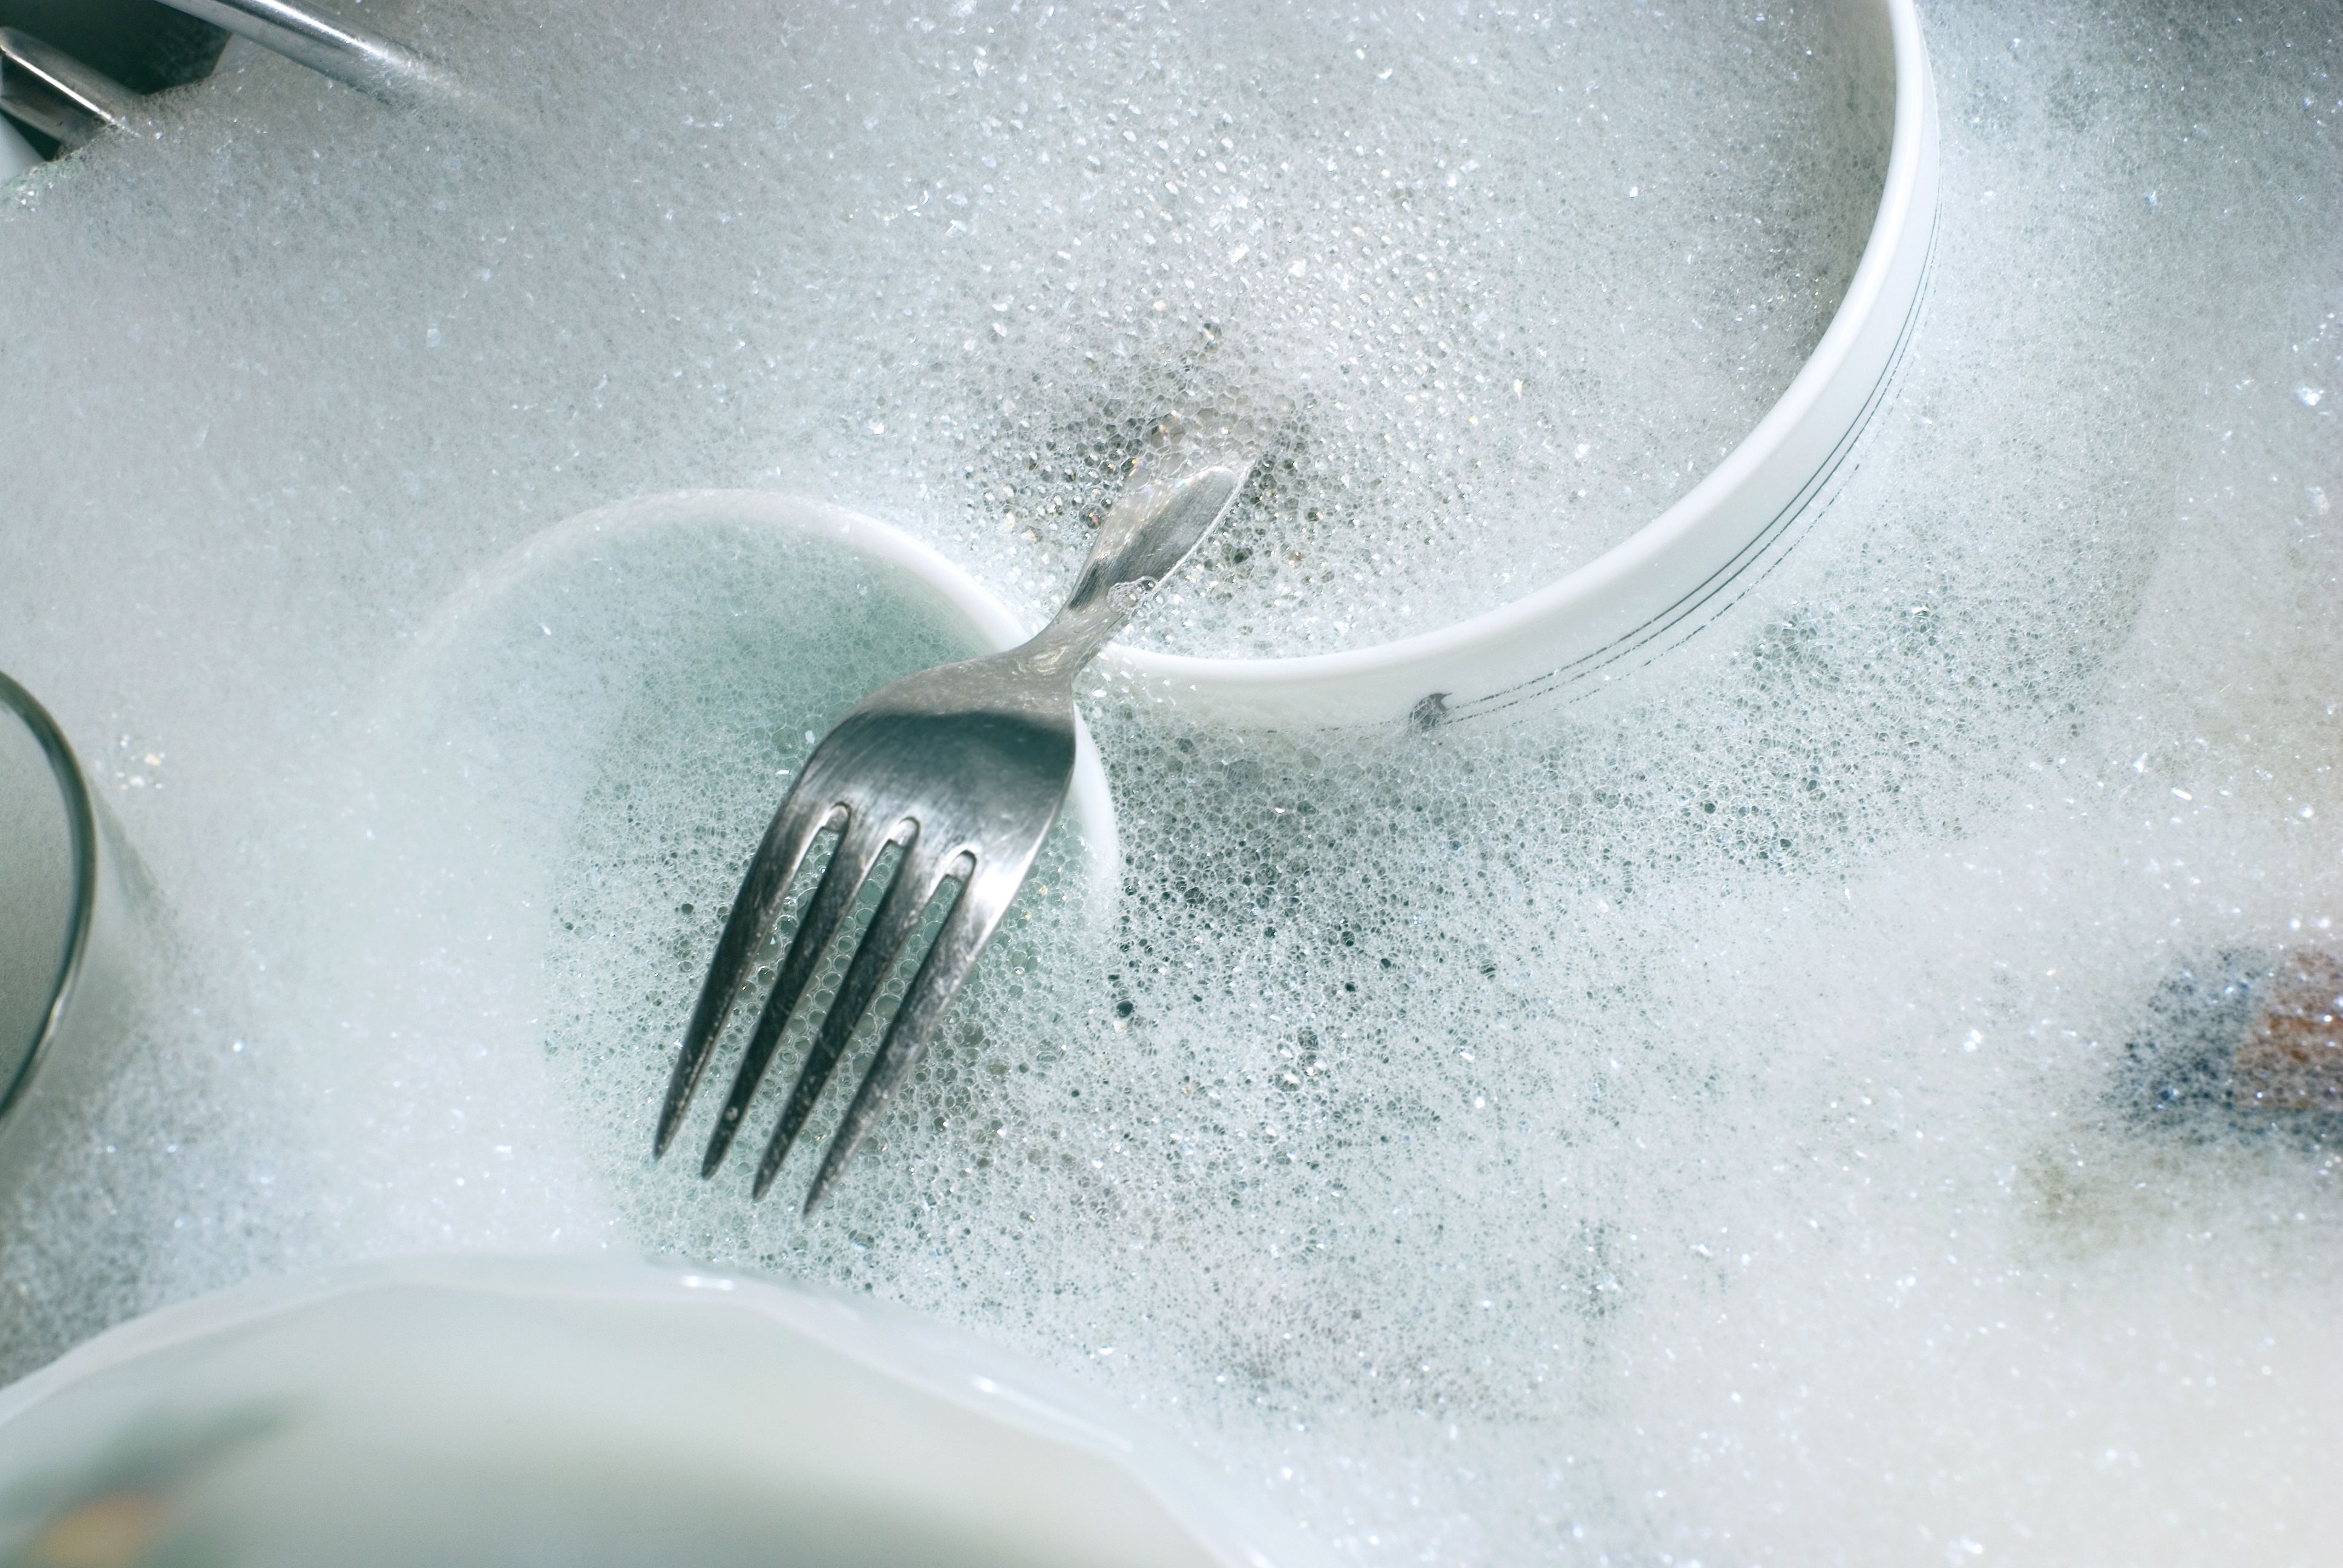 Мыть посуду раковина